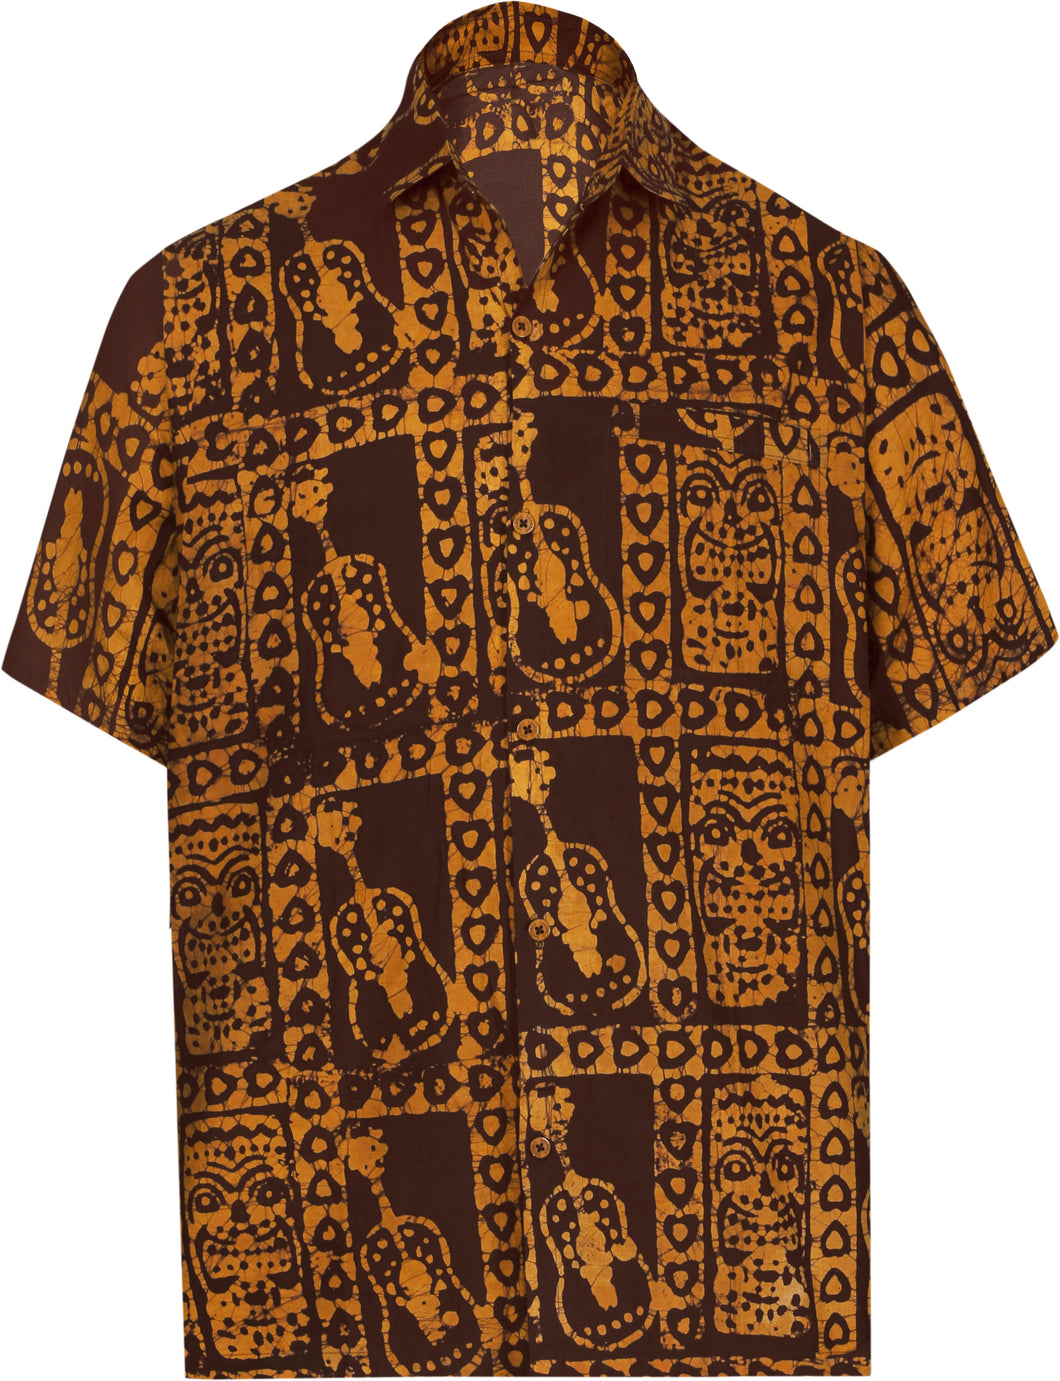 LA LEELA Men's Casual Beach hawaiian Shirt Aloha Tropical Beach  front Pocket Short sleeve Mustard